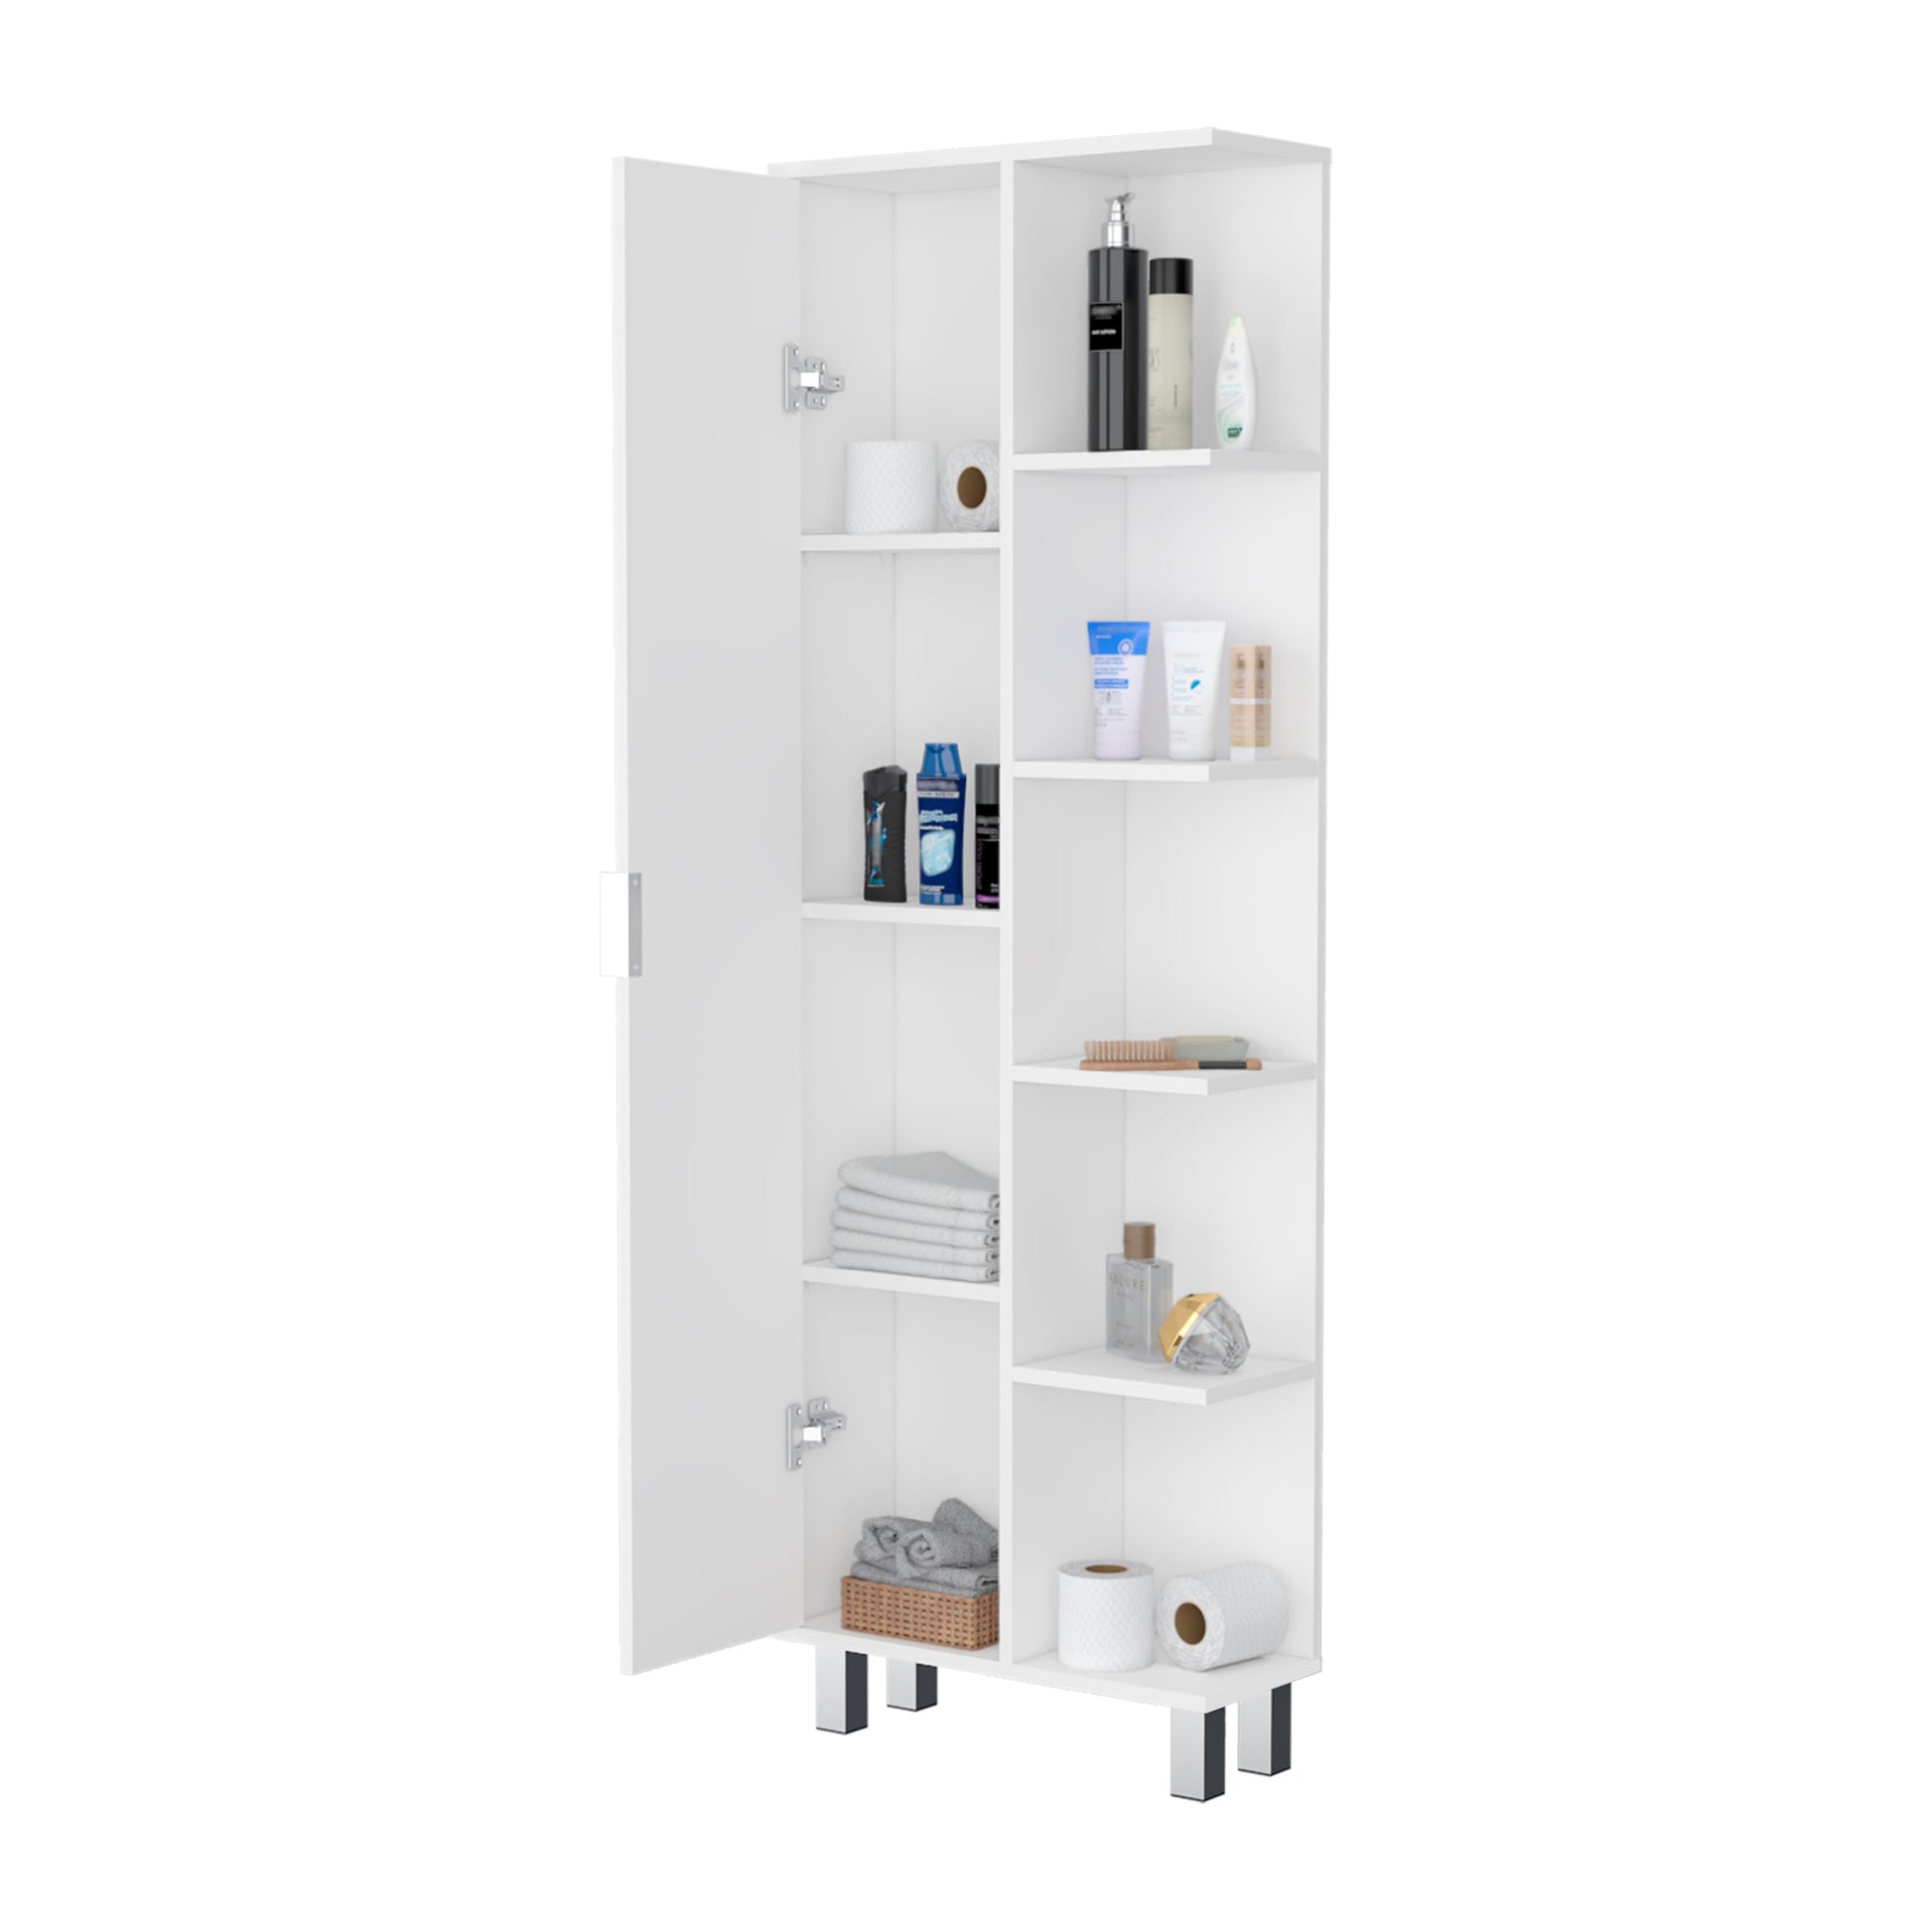 Lila White 1 Door Linen Cabinet - White 1 5 18 To